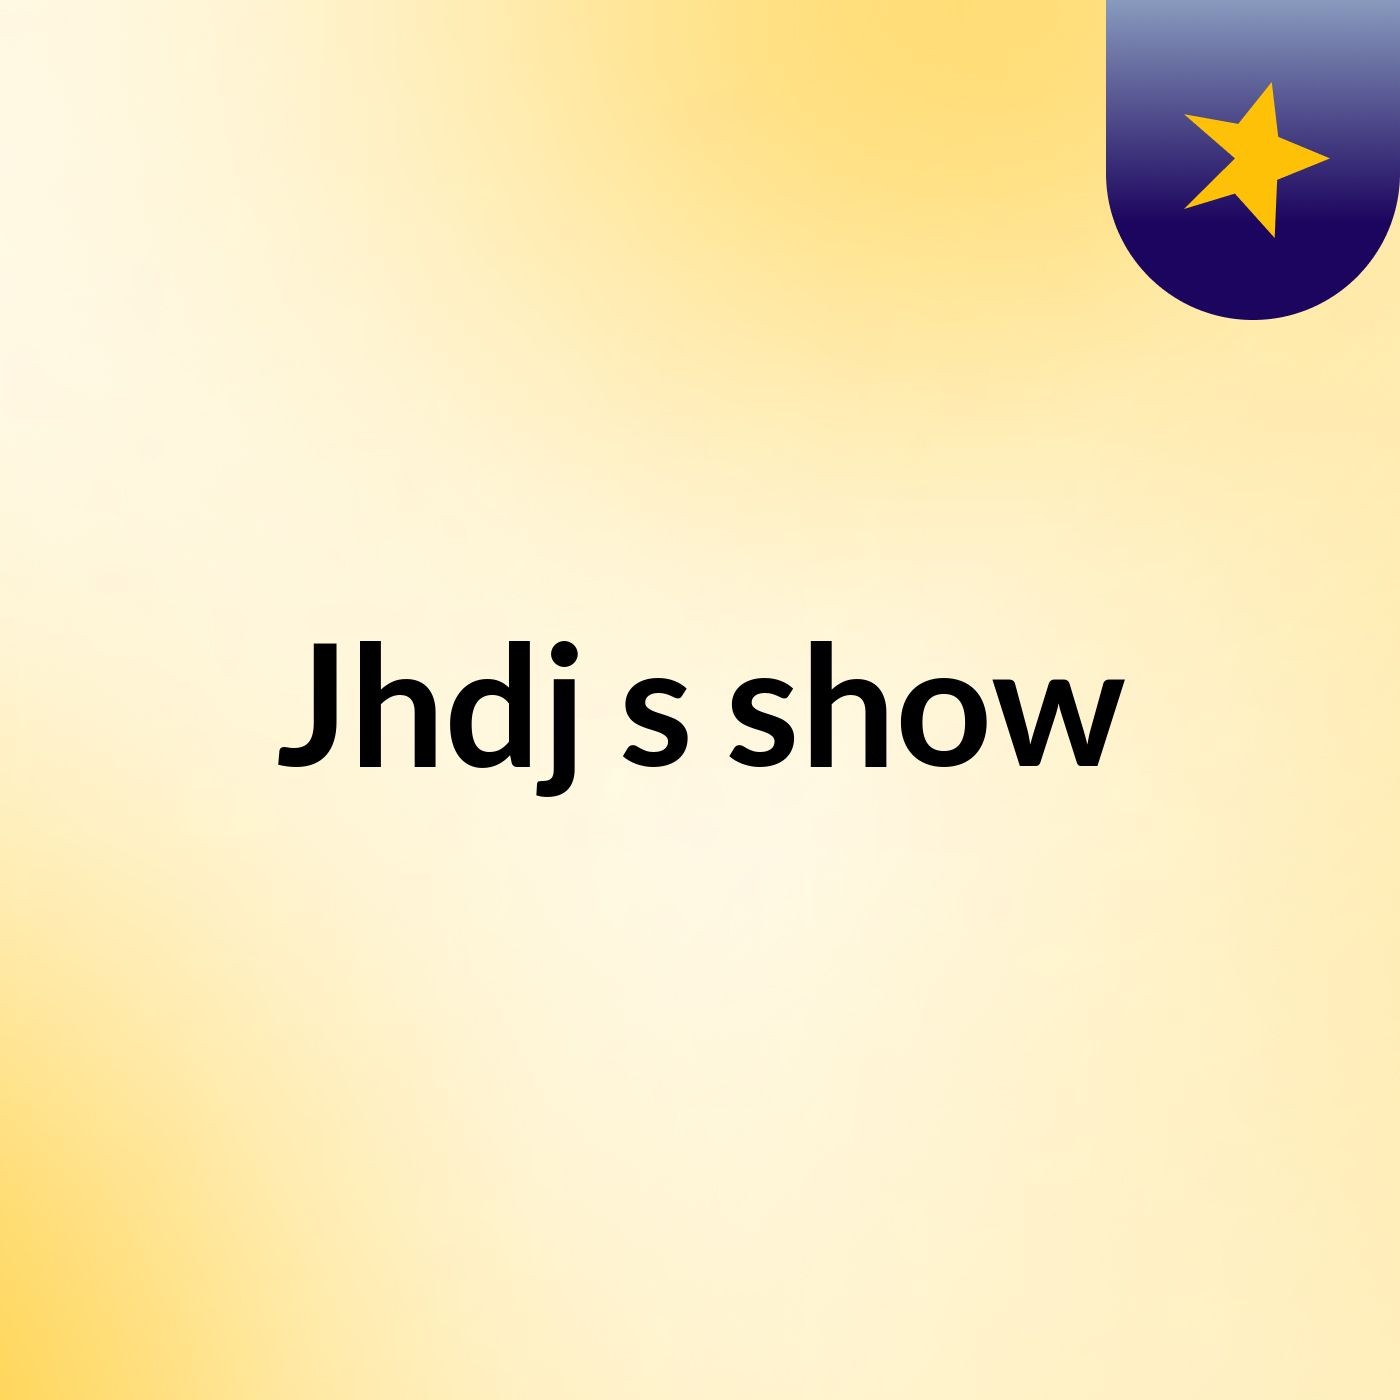 Jhdj's show